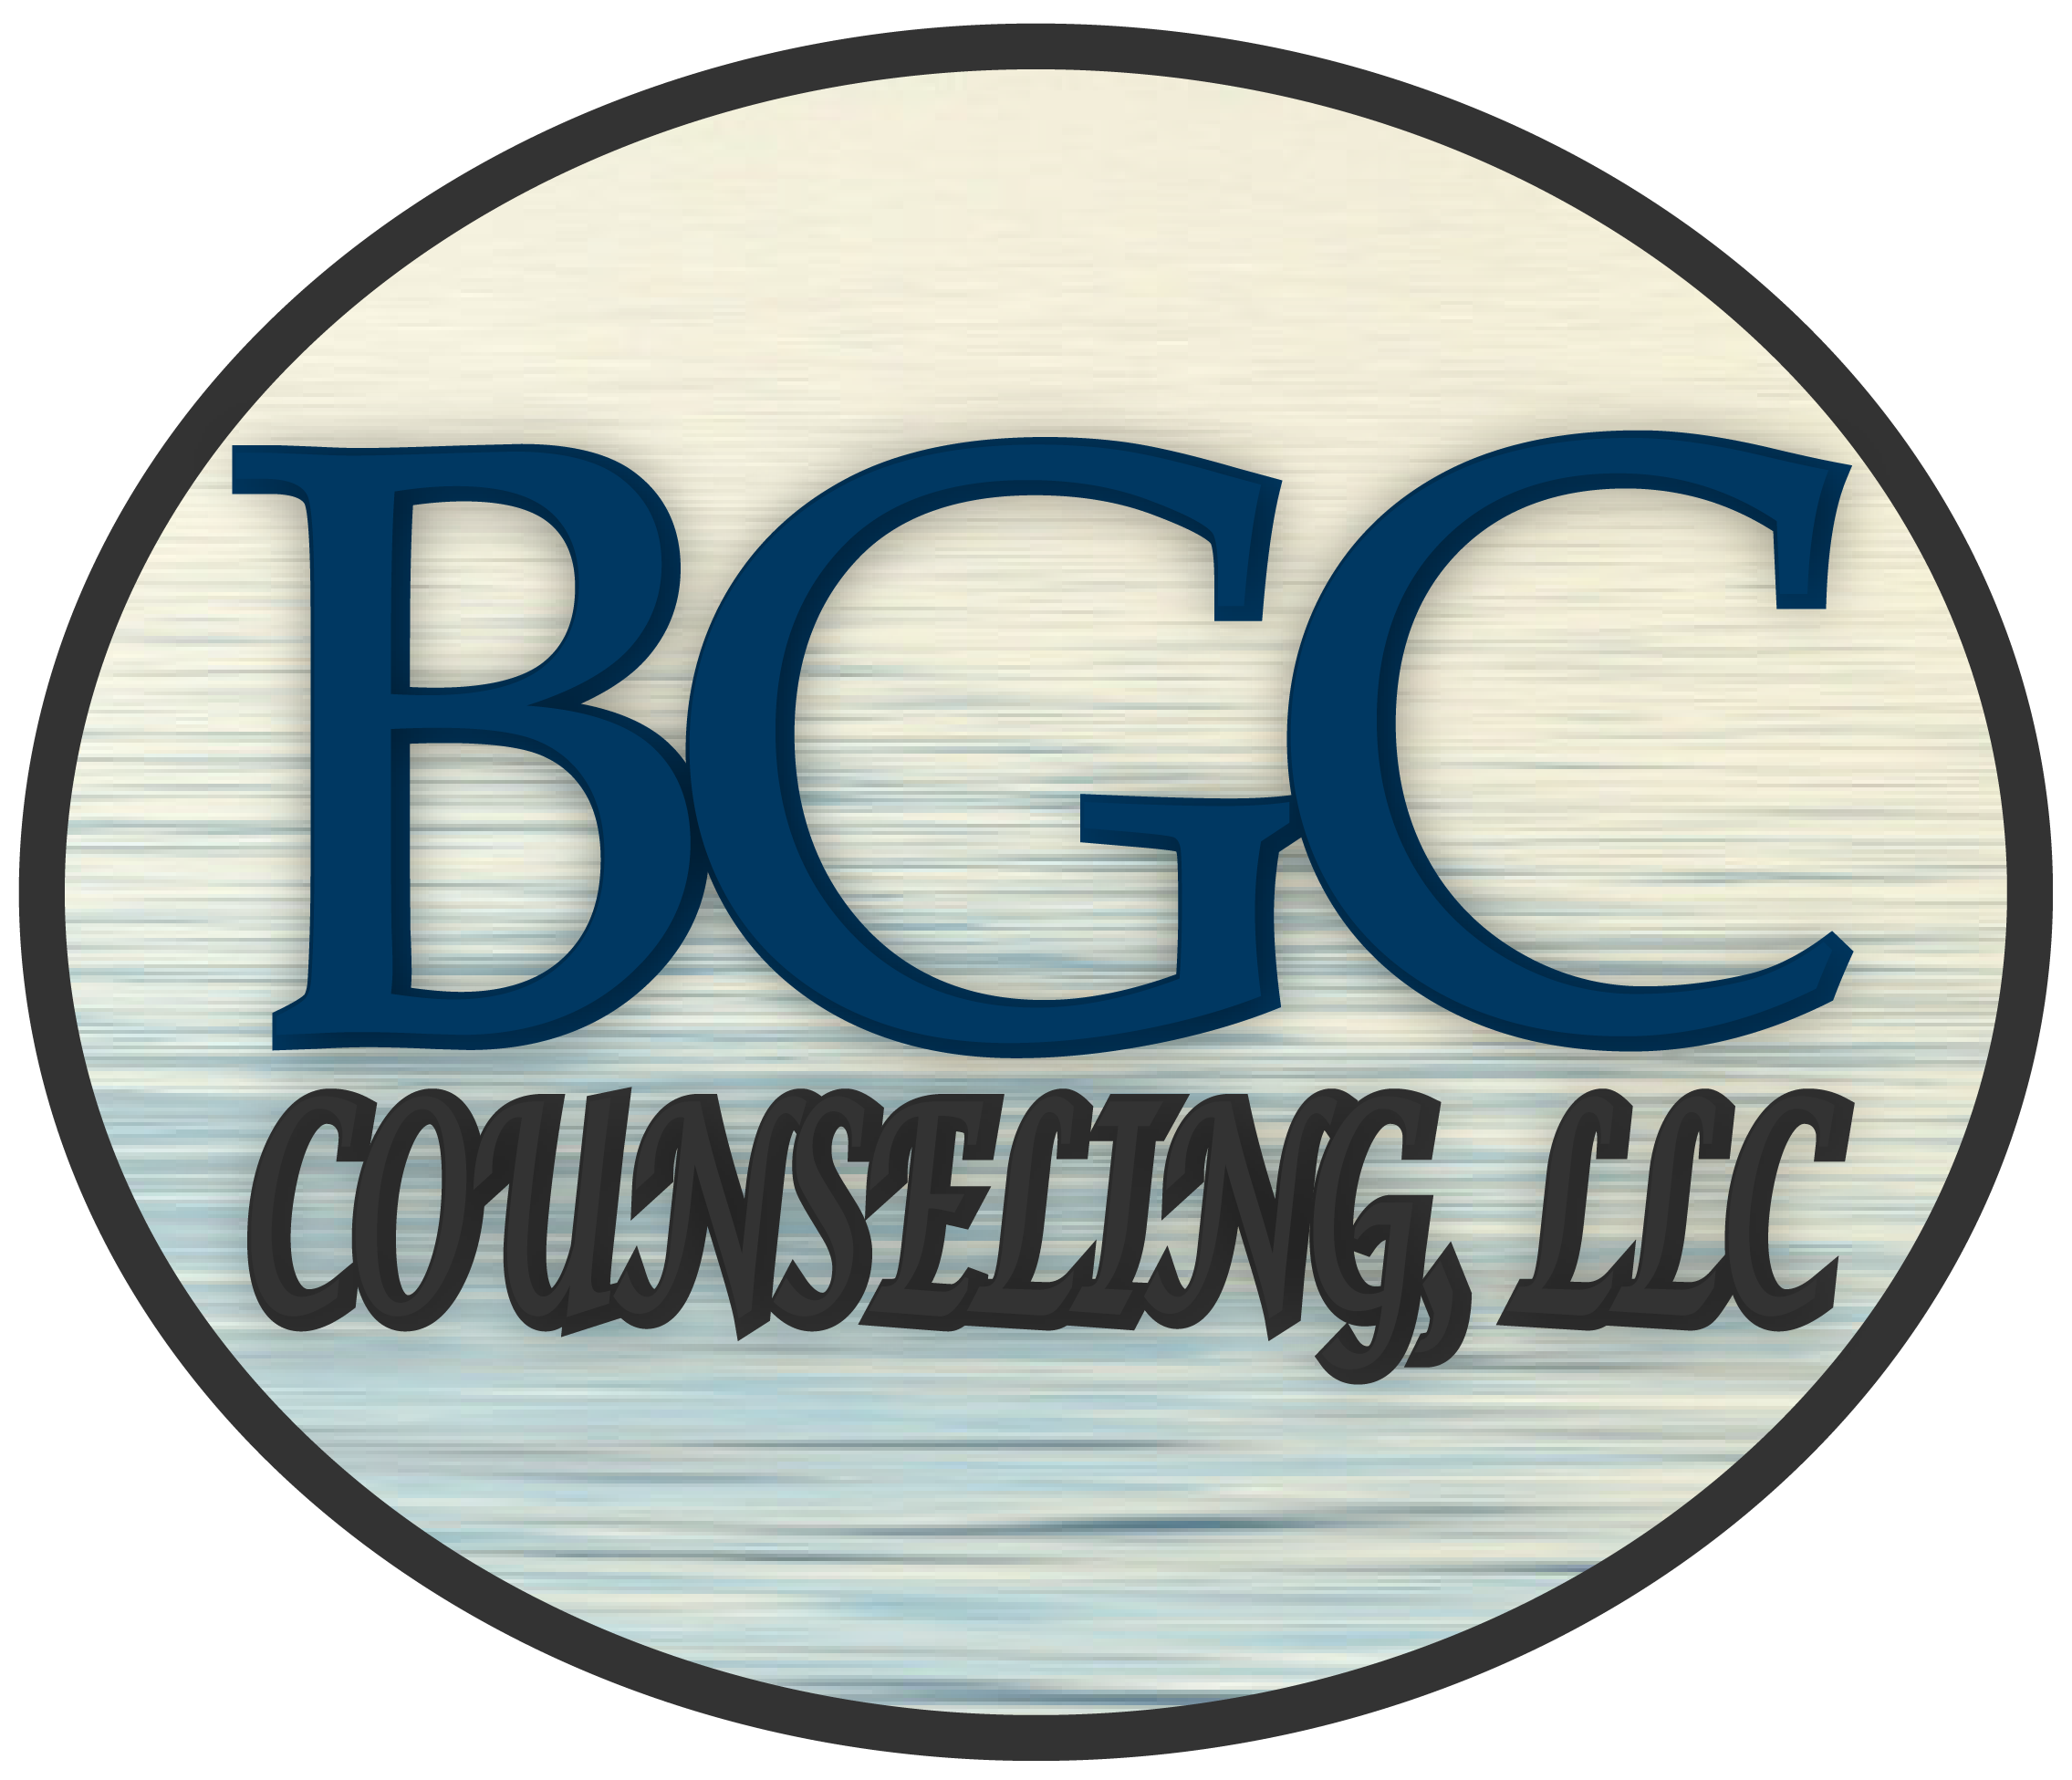 BGC Counseling LLC (Grand Opening Celebration with Ribbon Cutting) @ BGC Counseling LLC